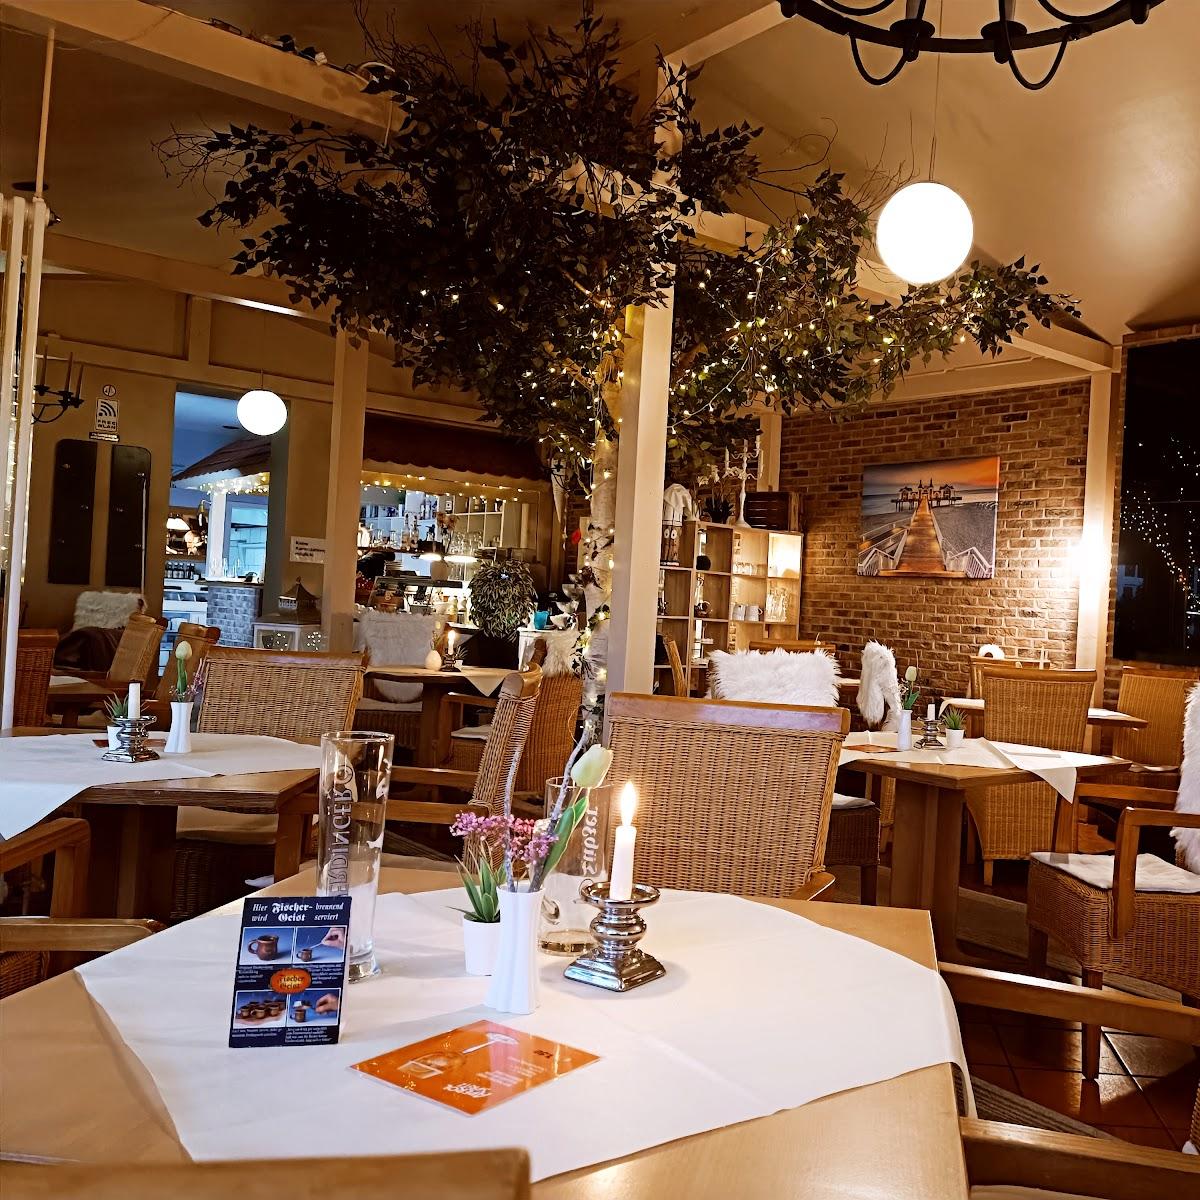 Restaurant "Restaurant  Zum Smutje  " in Sellin